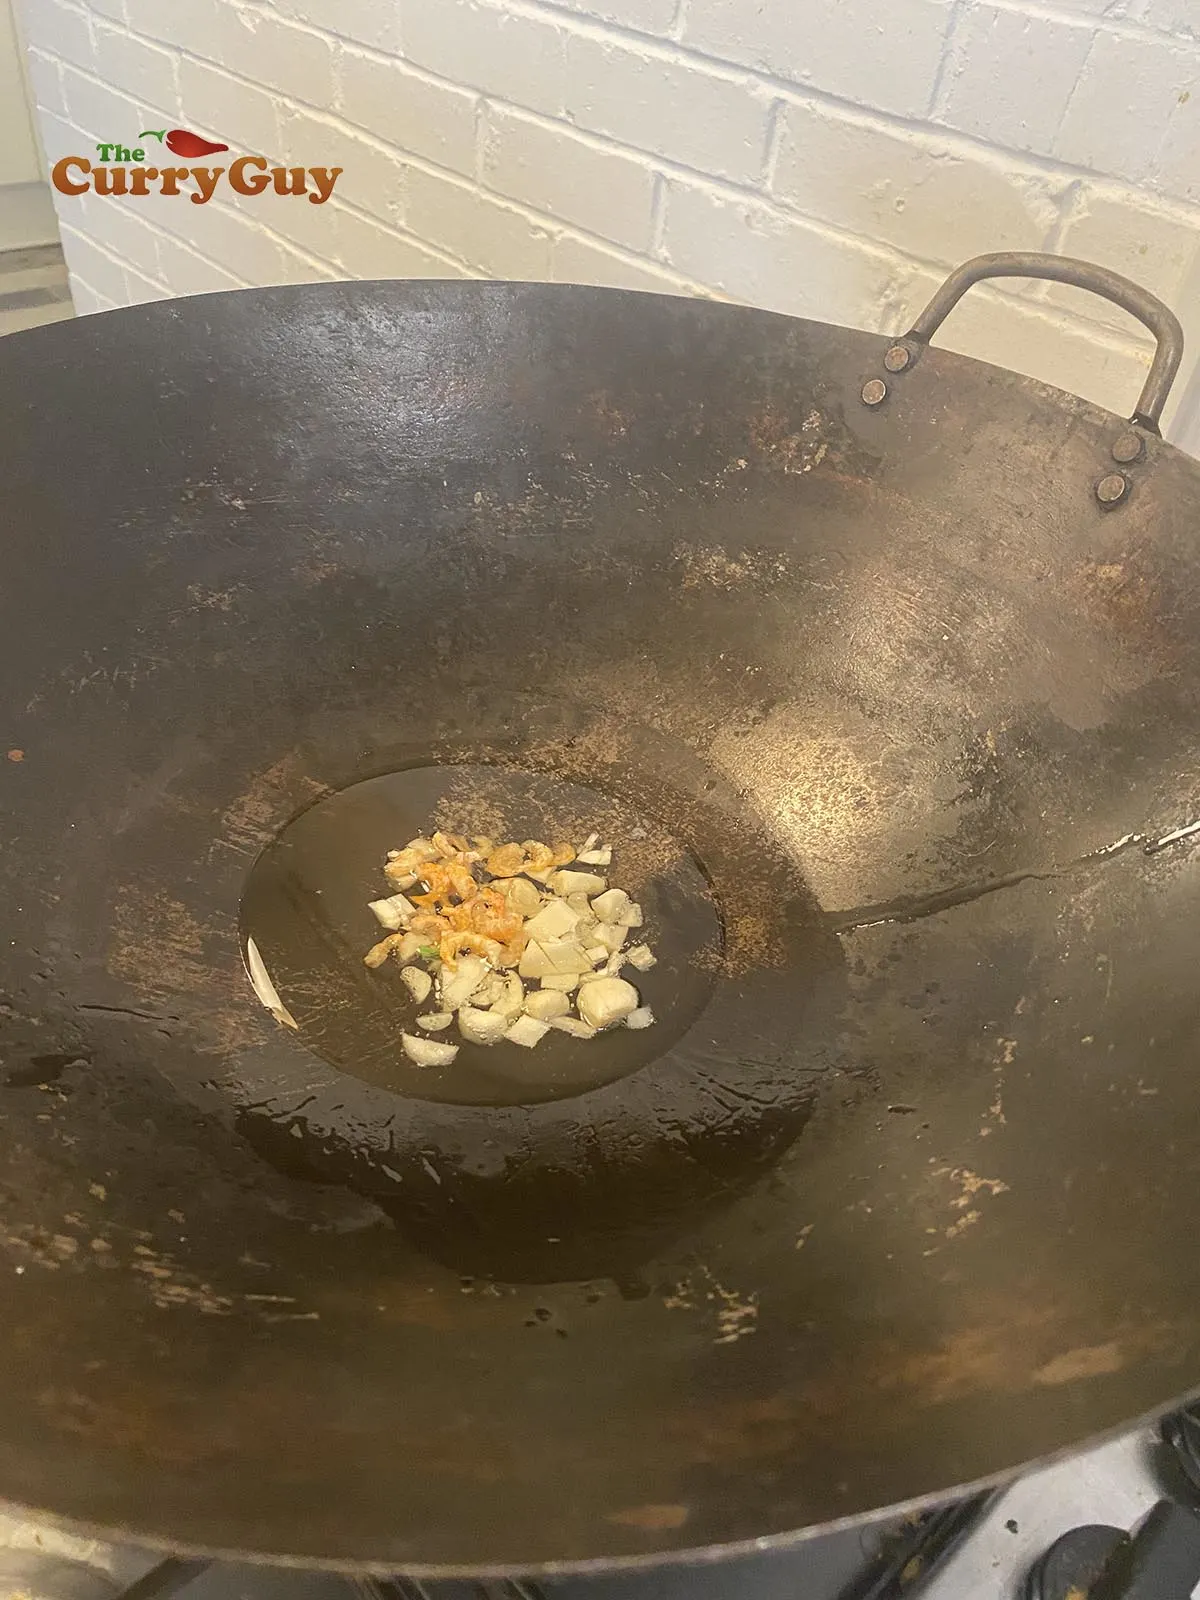 Frying garlic and shrimp.